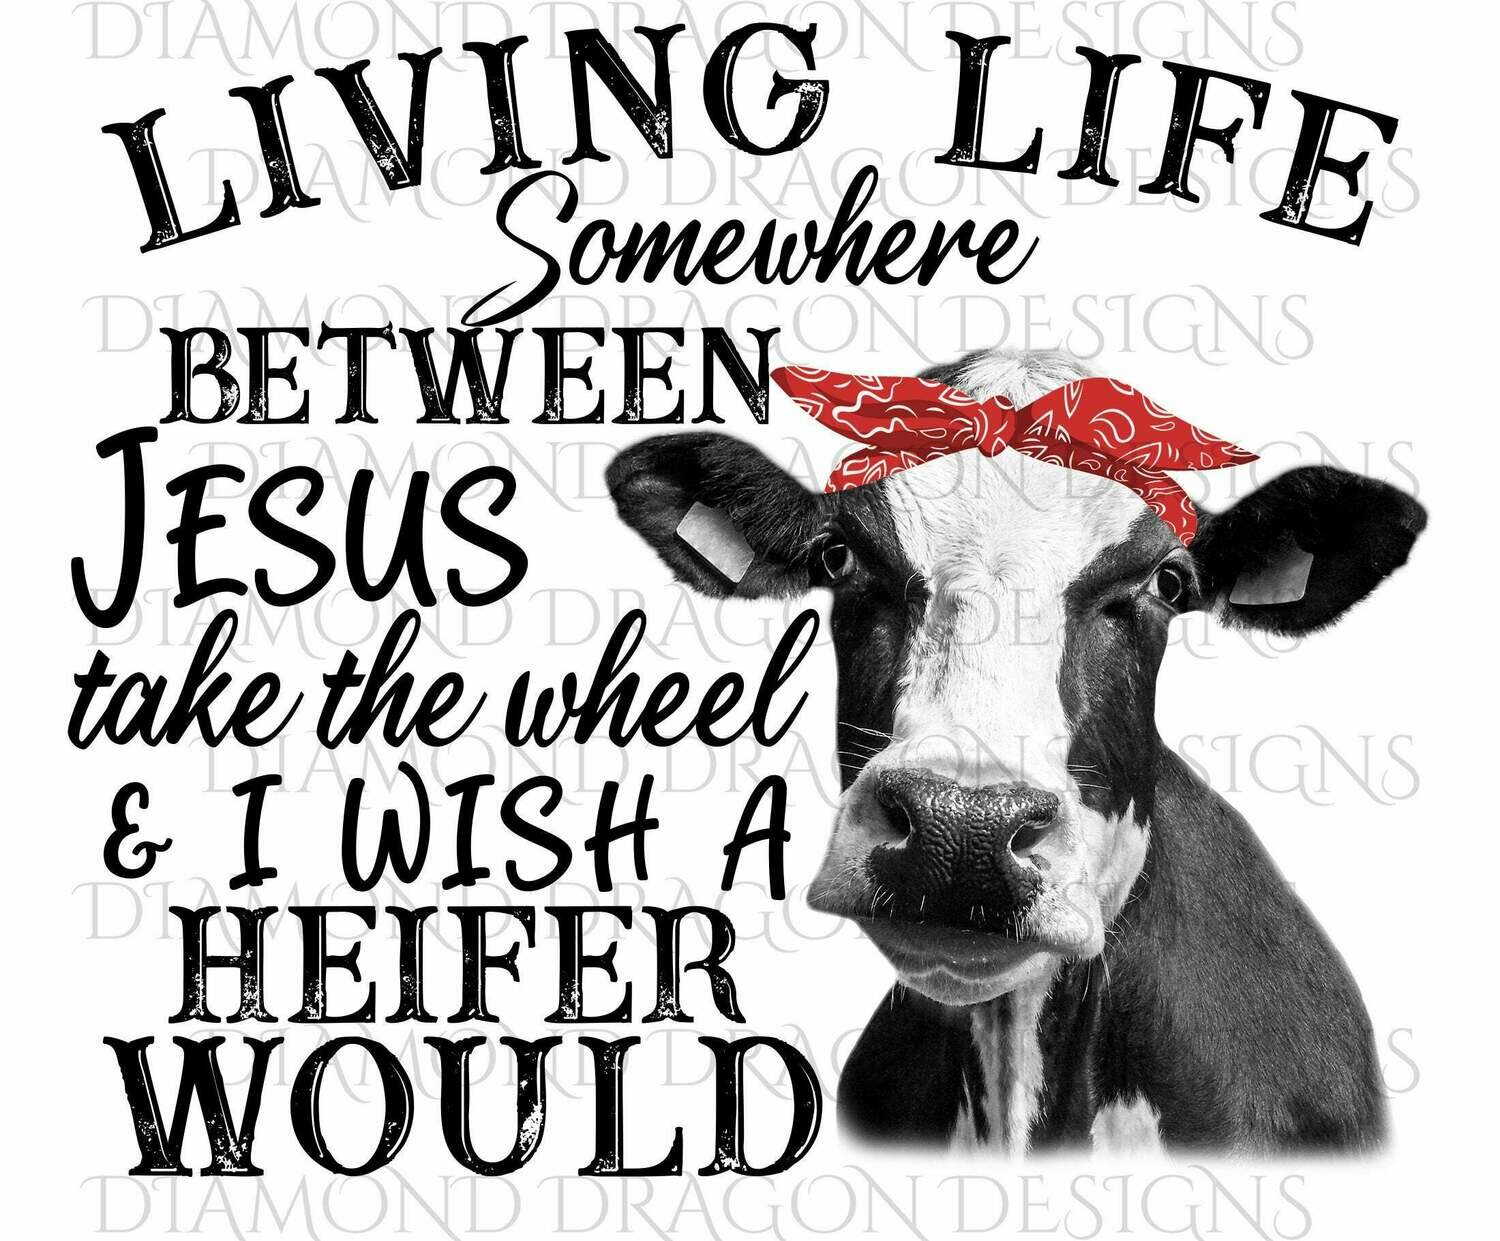 Cows - Heifer, Living Life Somewhere Between Jesus Take the Wheel & I Wish a Heifer Would, Red Bandana, Digital Image